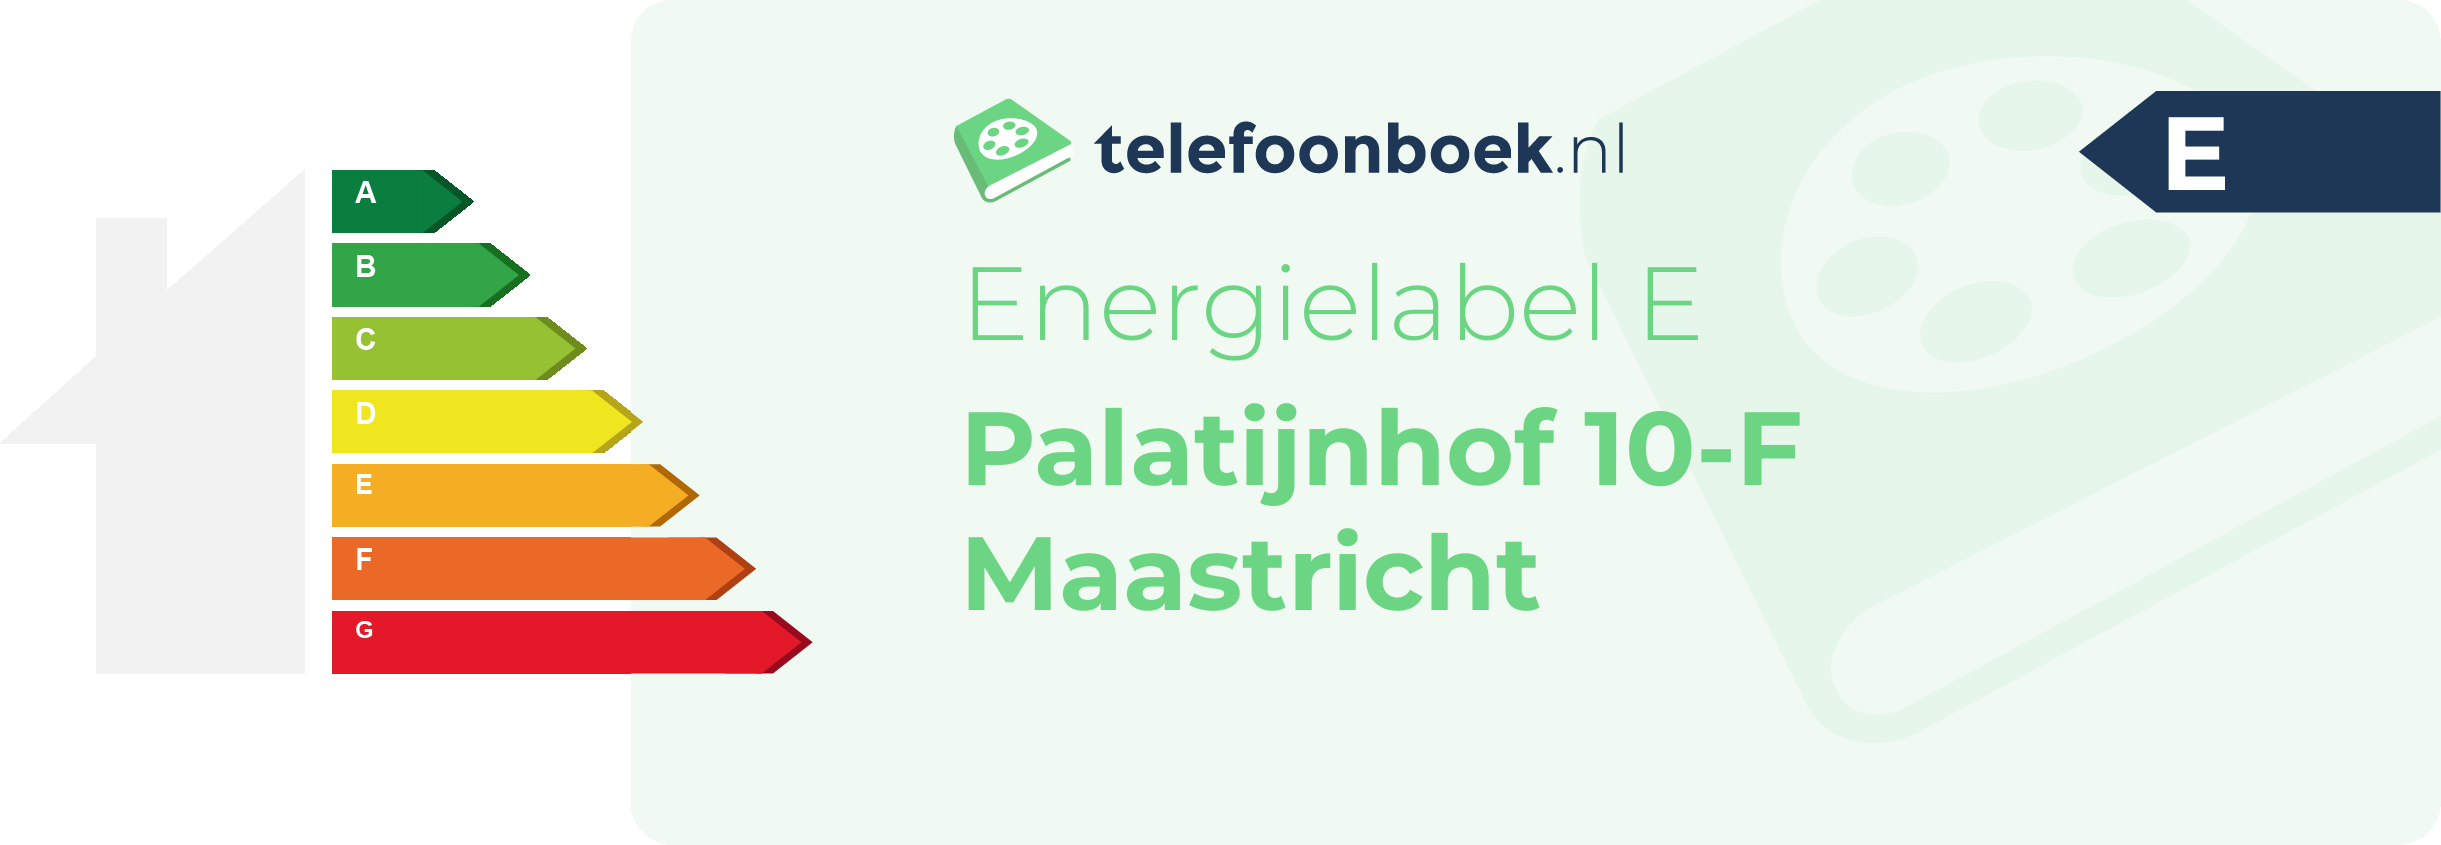 Energielabel Palatijnhof 10-F Maastricht